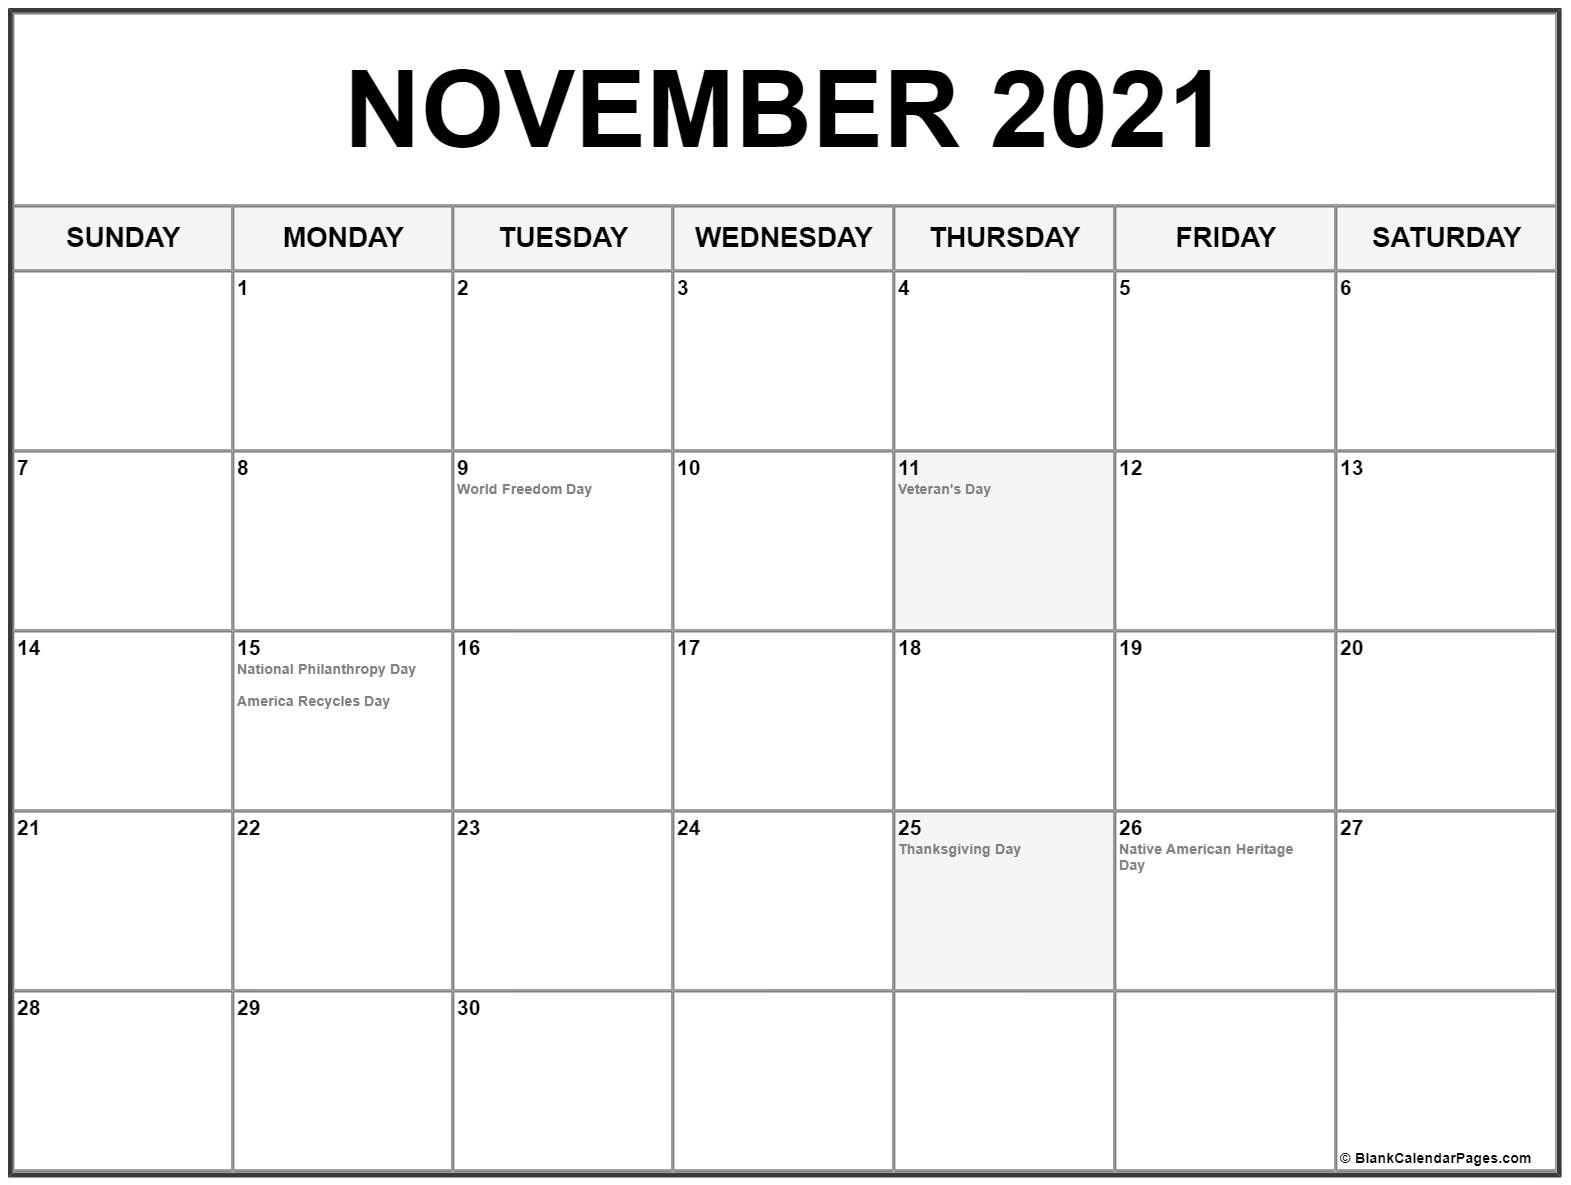 November 2021 Calendar Holidays Printable | Avnitasoni Cute November 2021 Calendar